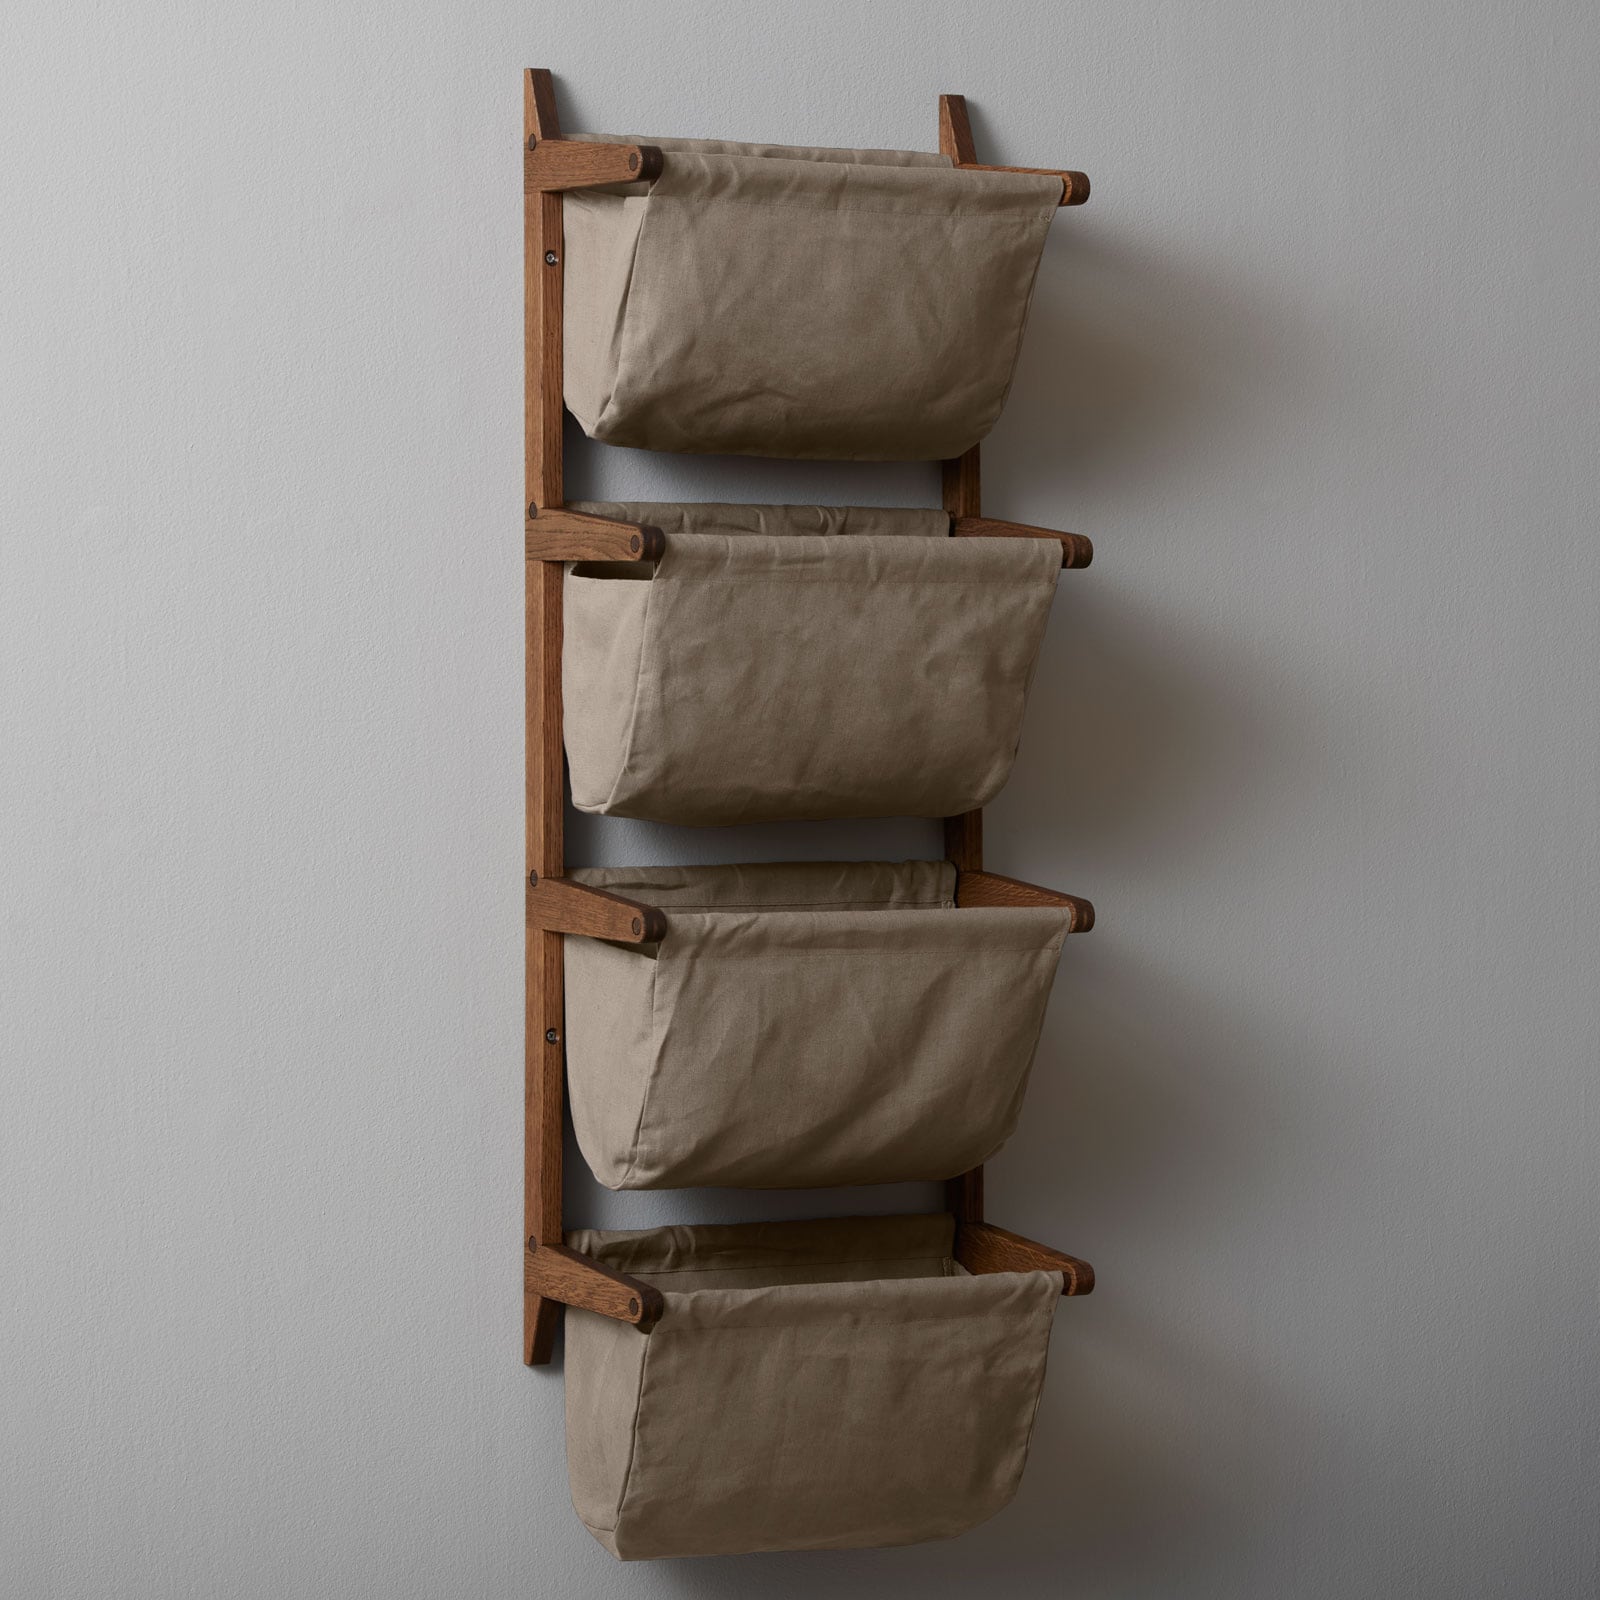 Bag Shelf with 4 bags